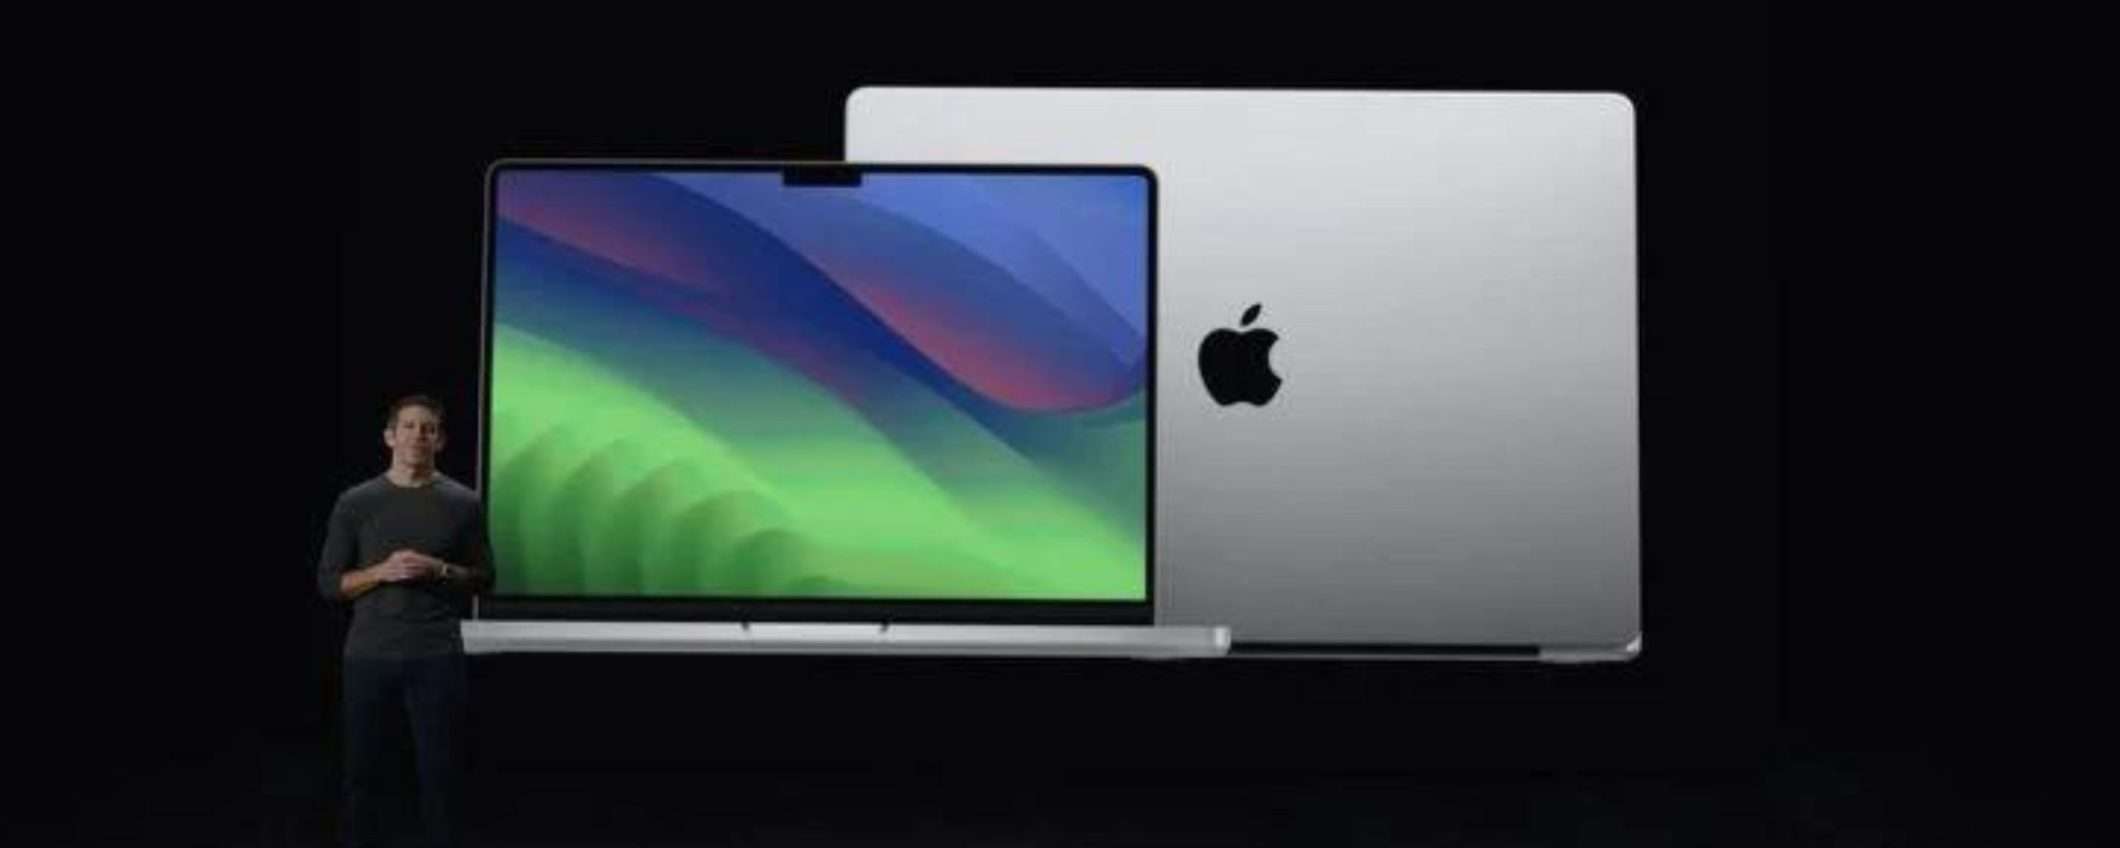 Apple prevede di dotare i nuovi MacBook del modem Cellular (RUMOR)